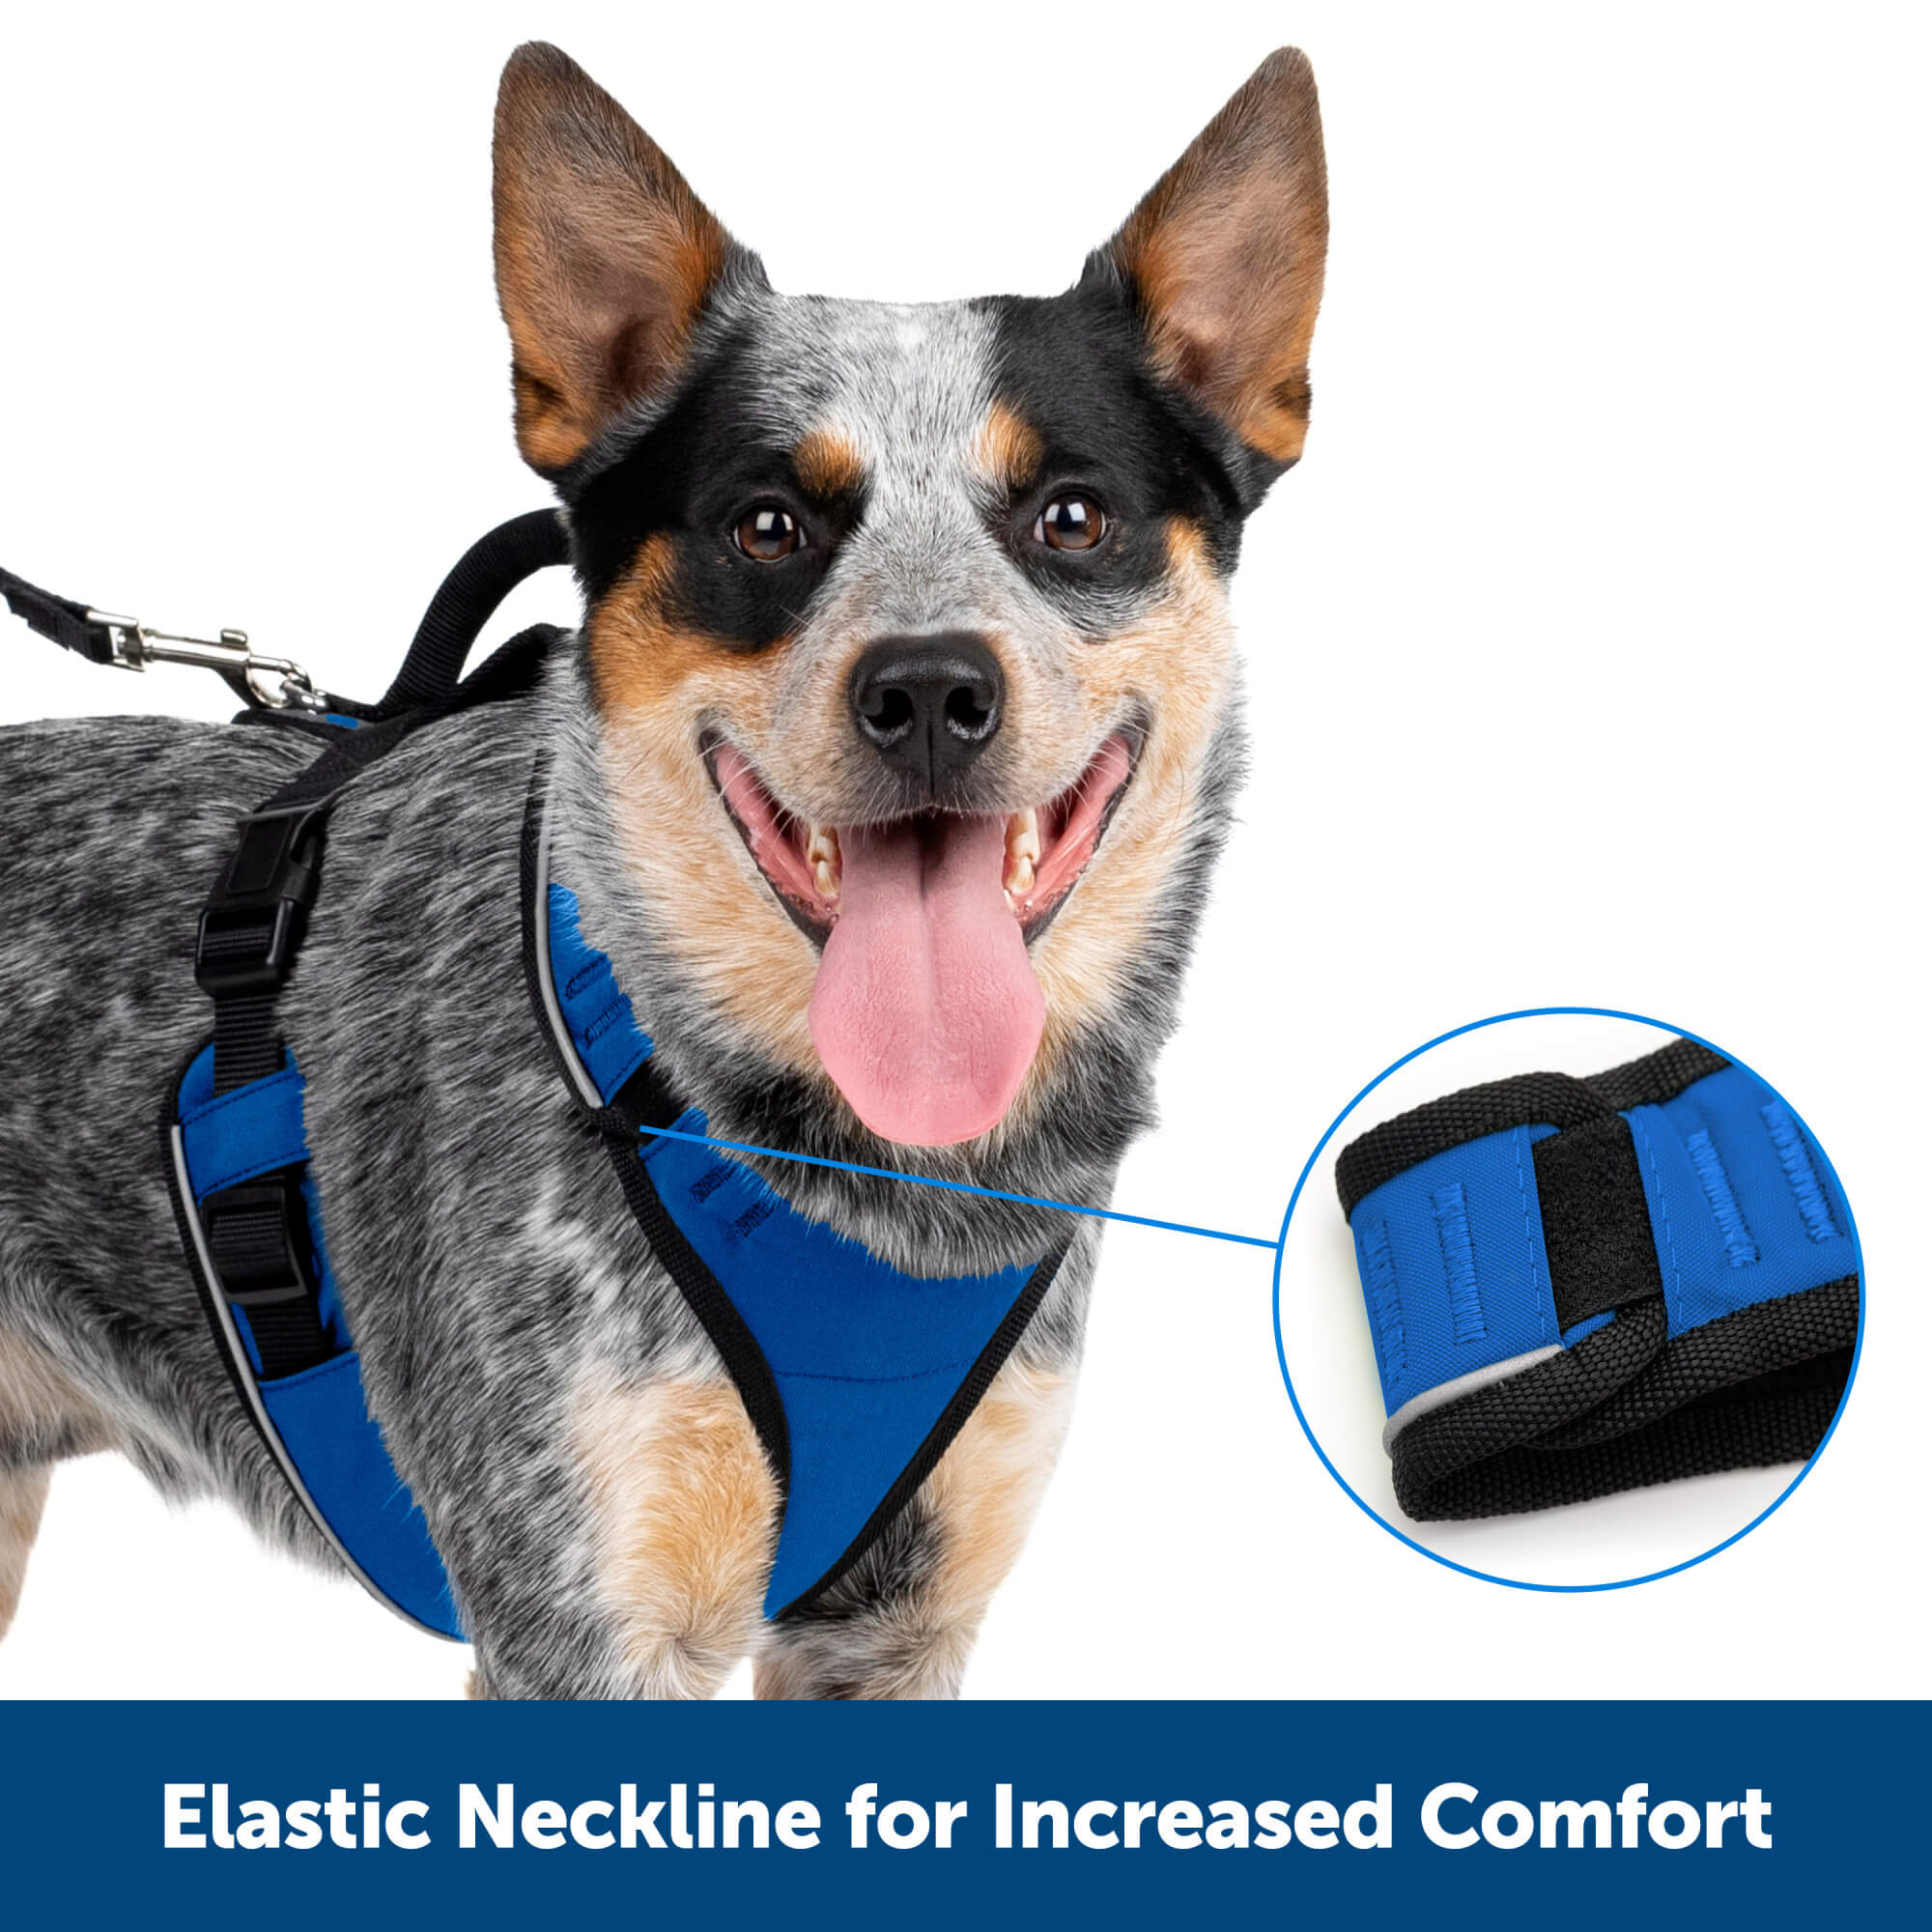 Elastic neckline for increased comfort